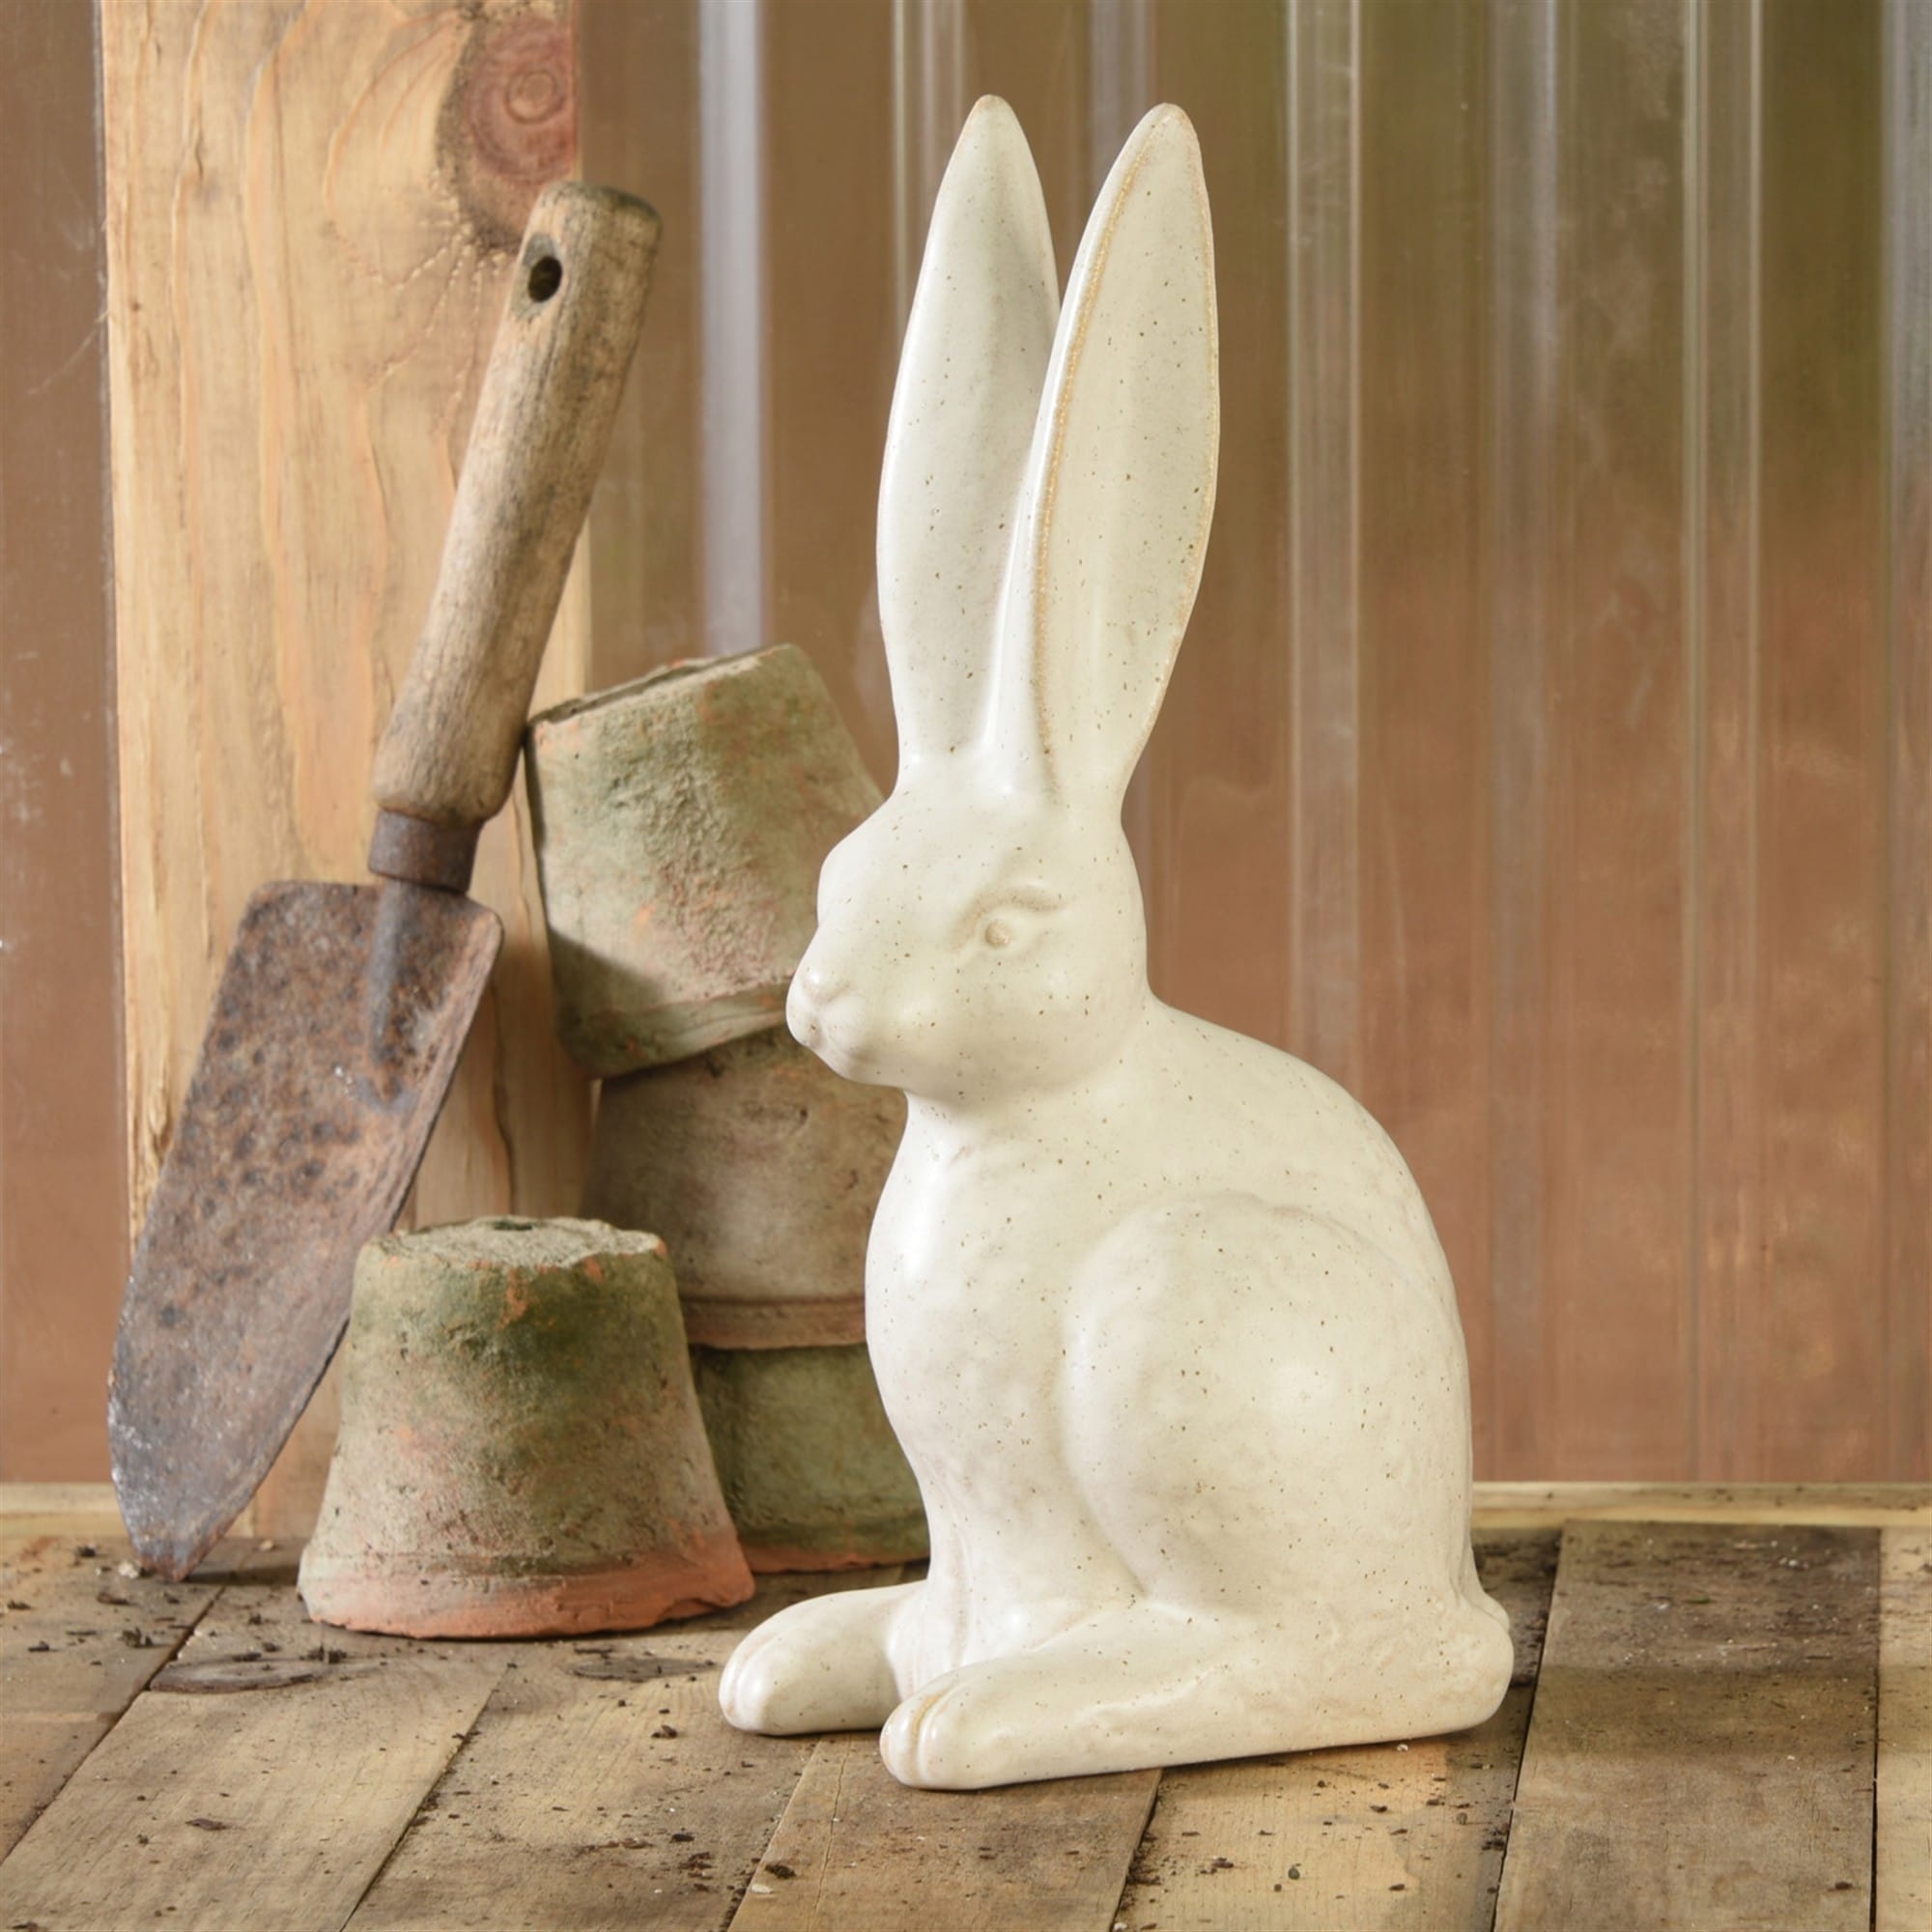 jumbo ceramic rabbit sculpture - 5.5"W x 3.75"D x 11"H